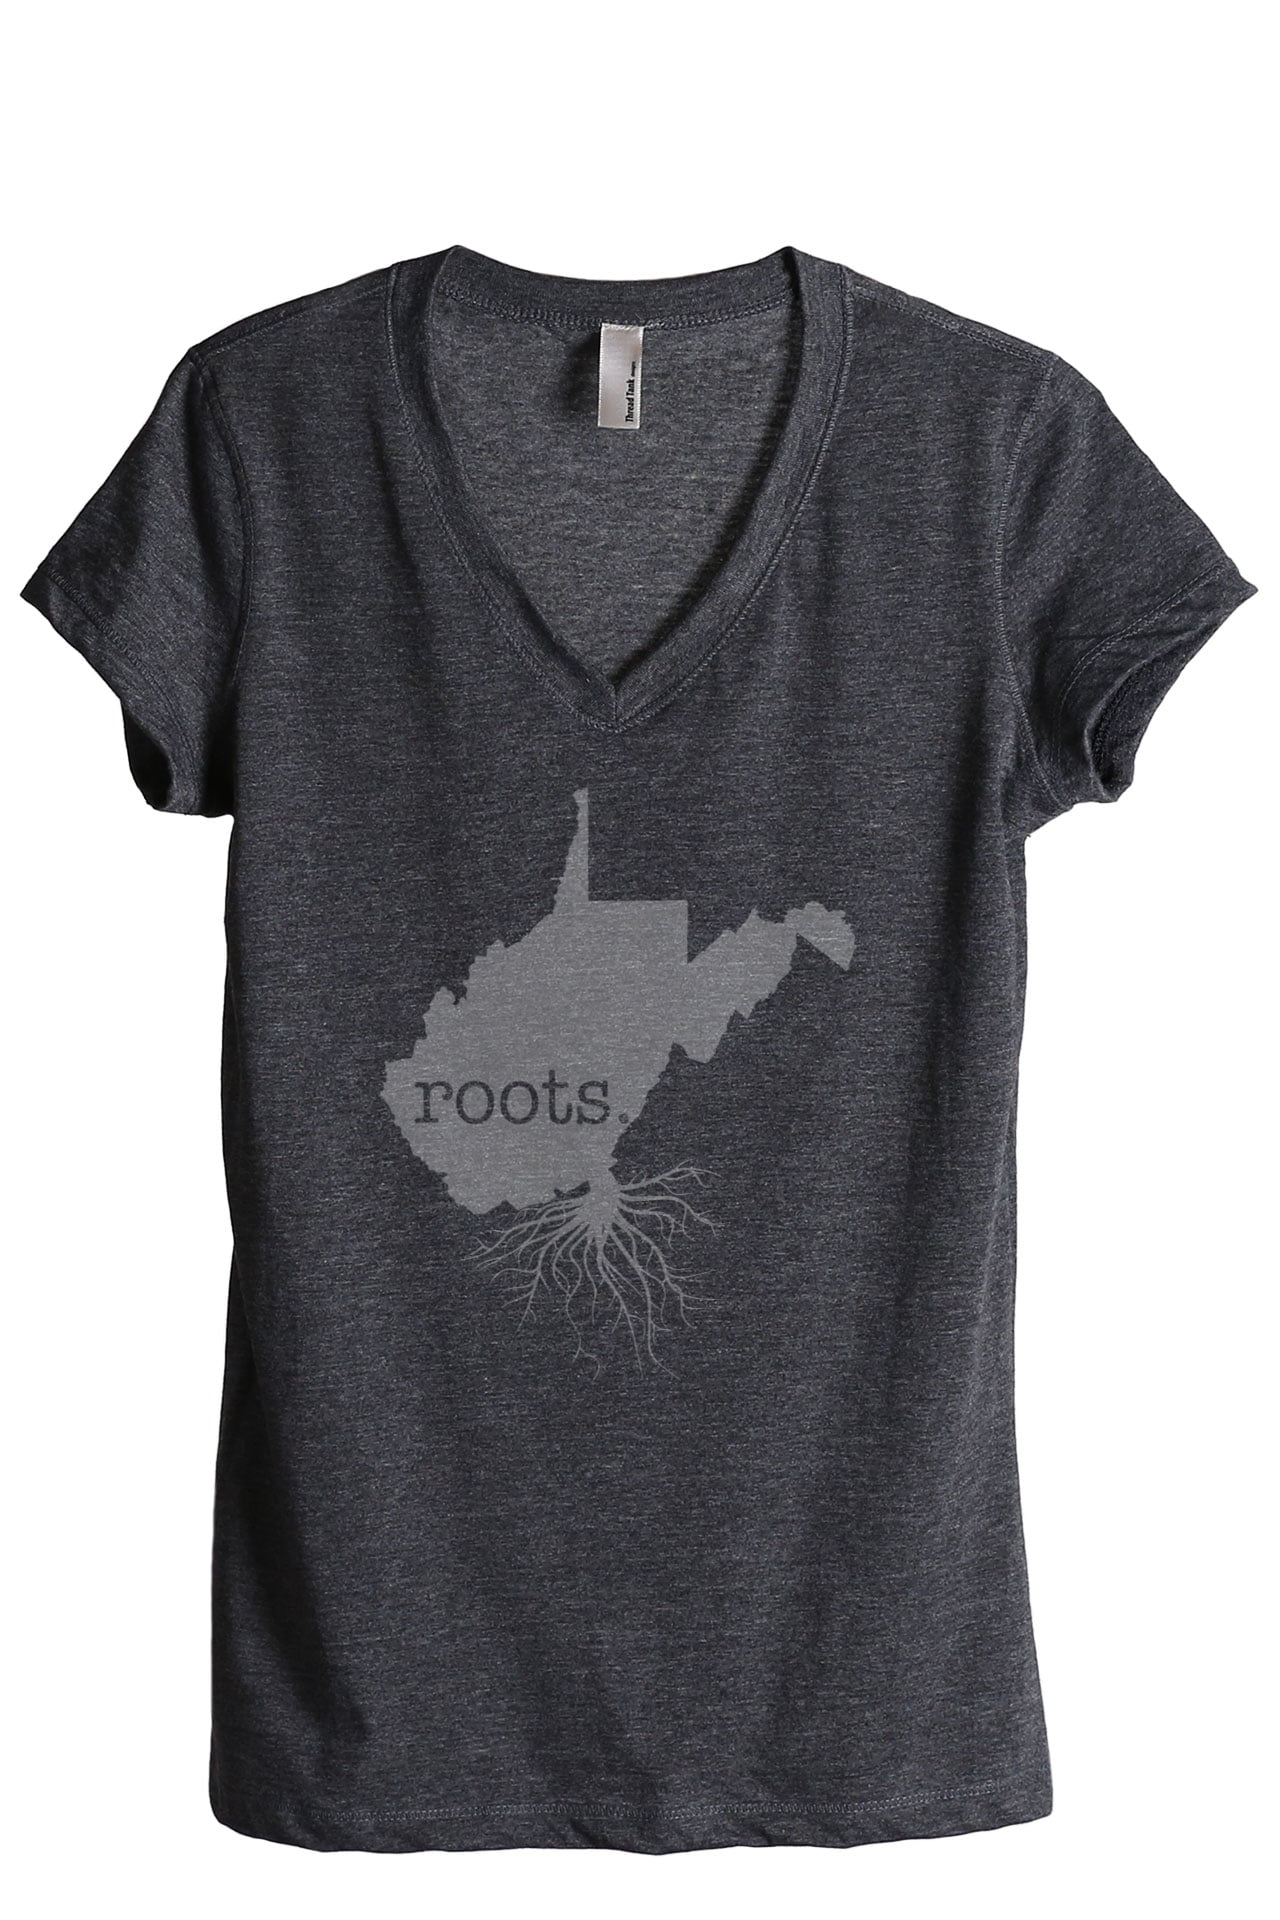 West Virginia Roots Tshirt